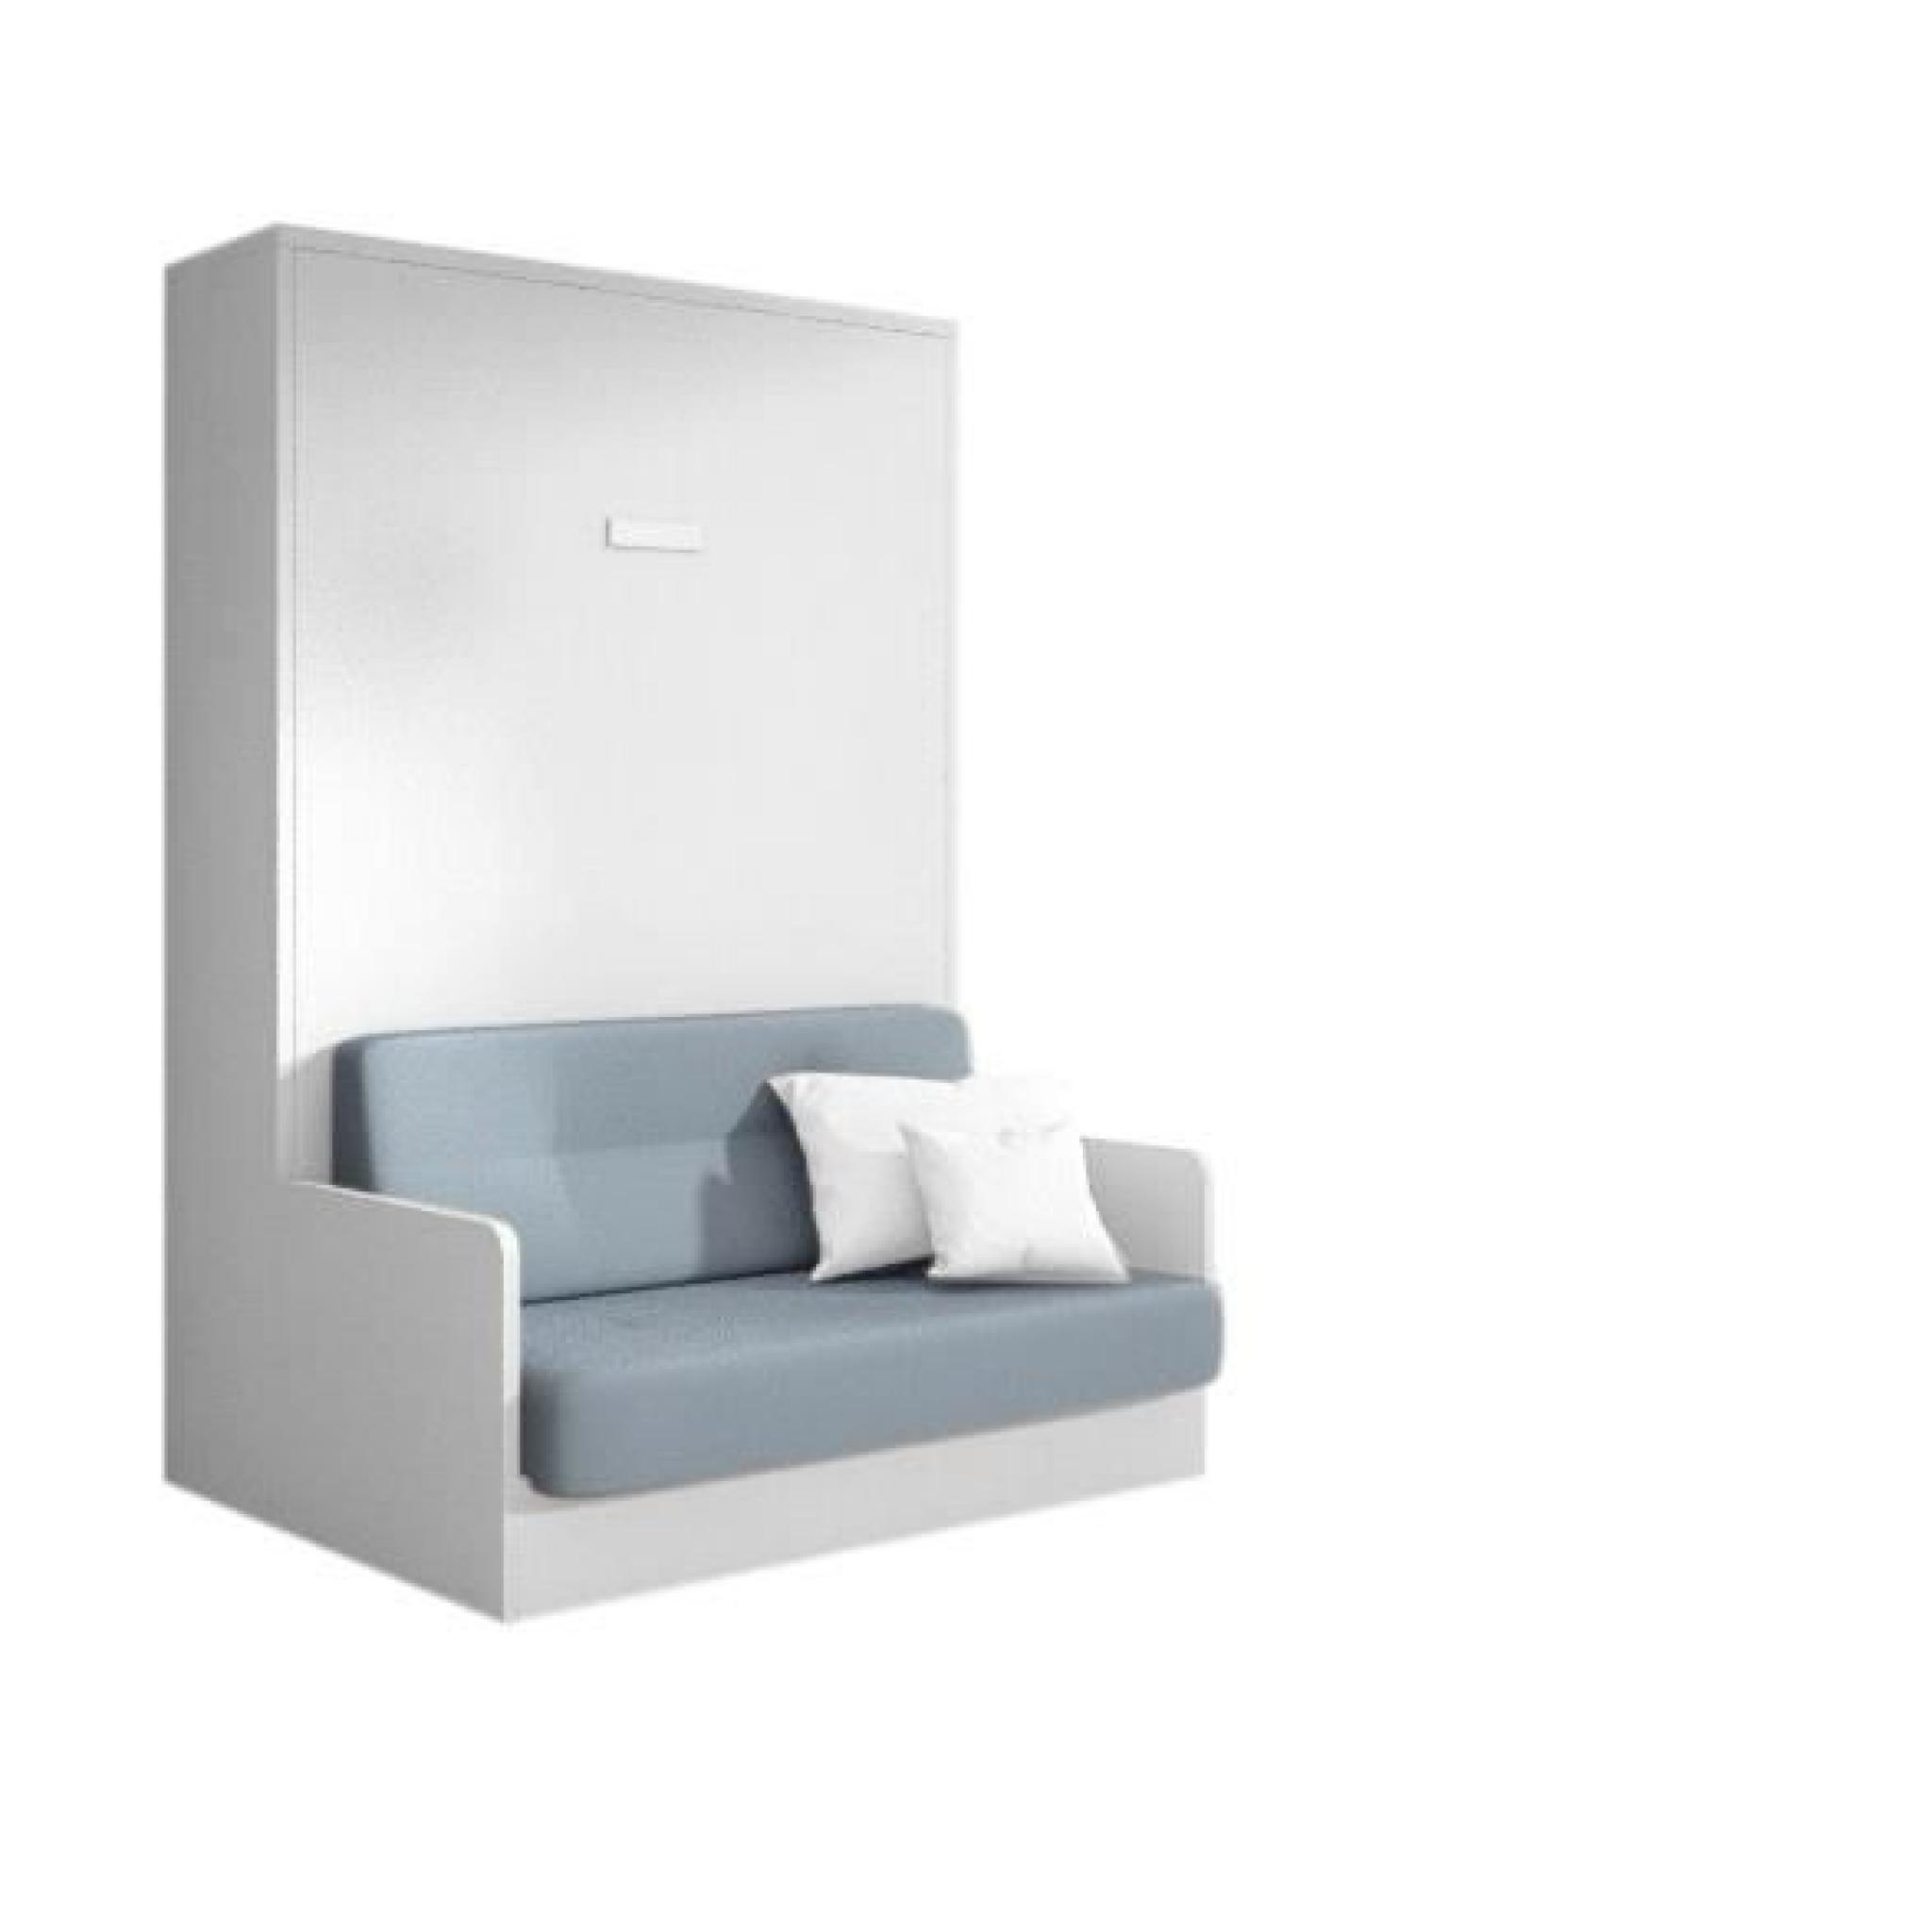 JOY - Armoire lit 160x200 chêne blanc avec canapé